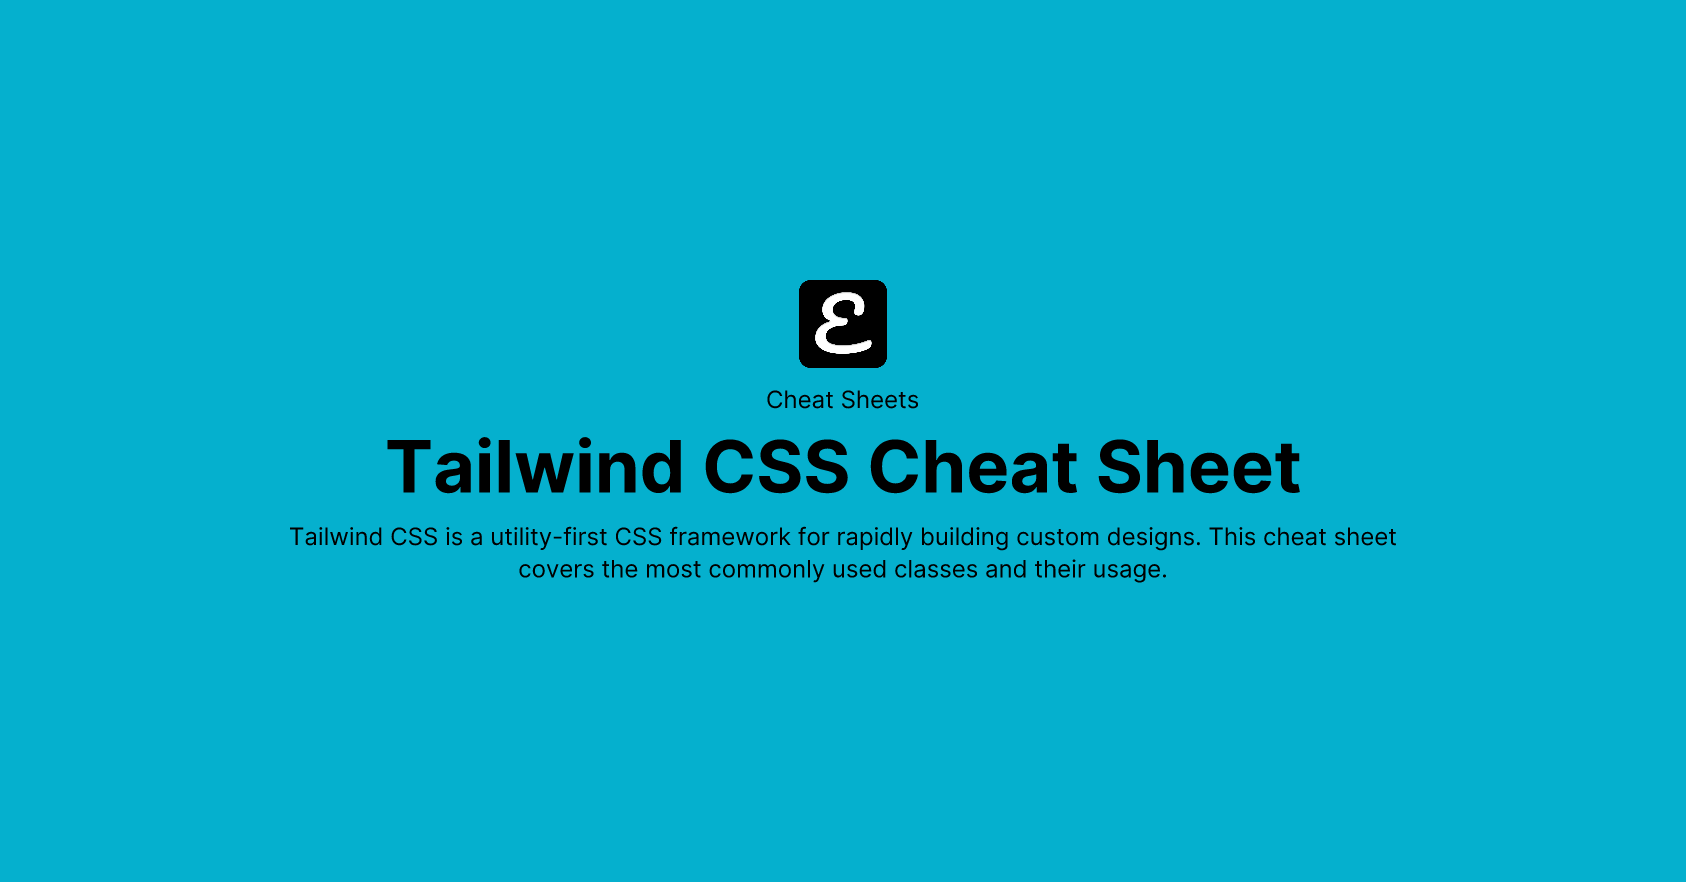 Tailwind CSS Cheat Sheet by Eric David Smith